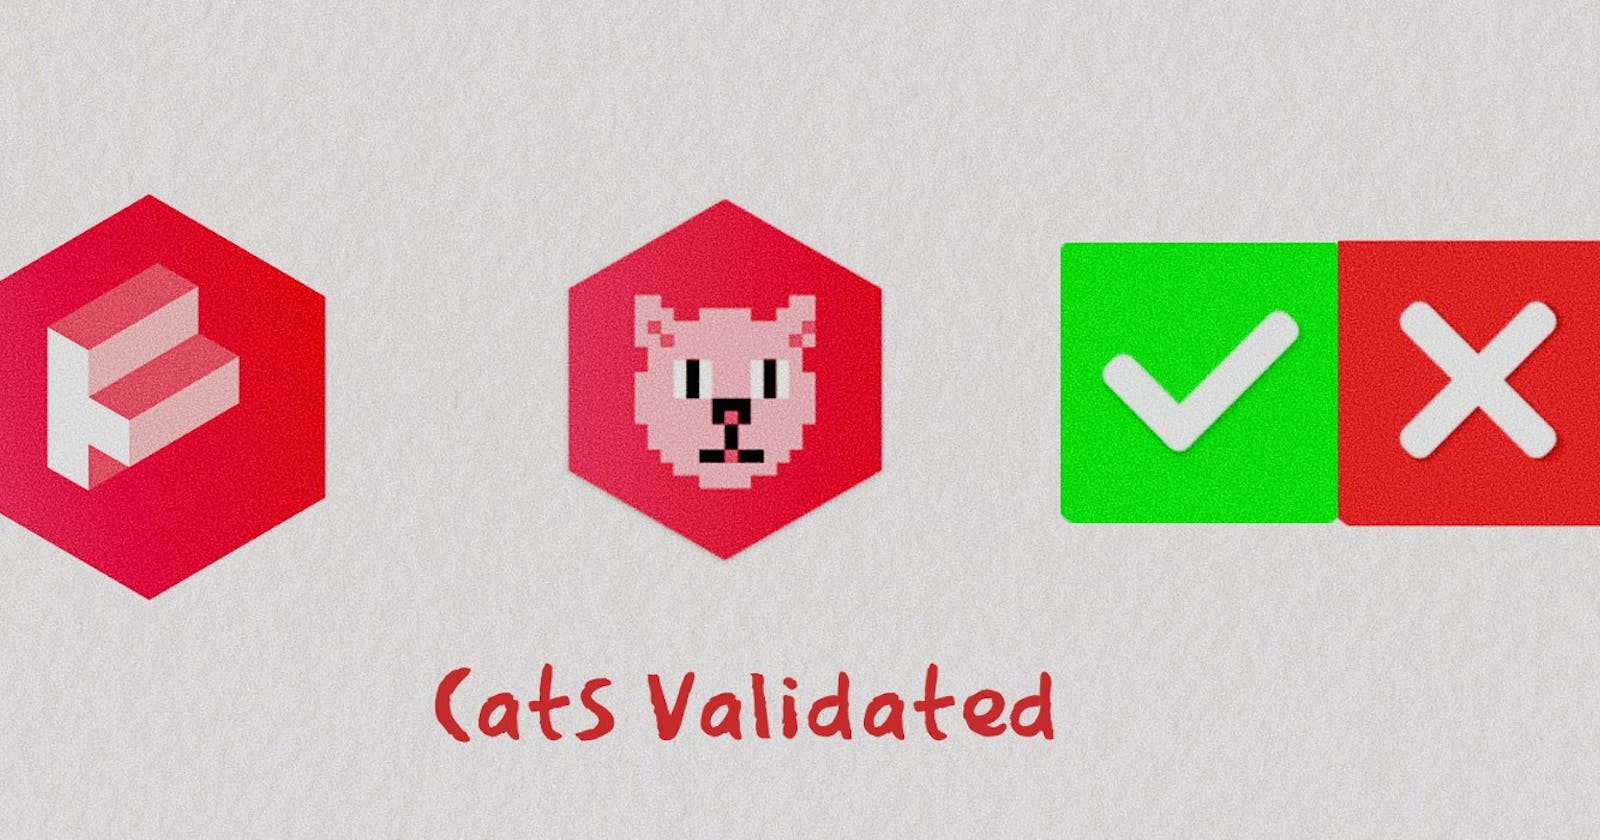 Data Validation and Error Accumulation using Cats Validated